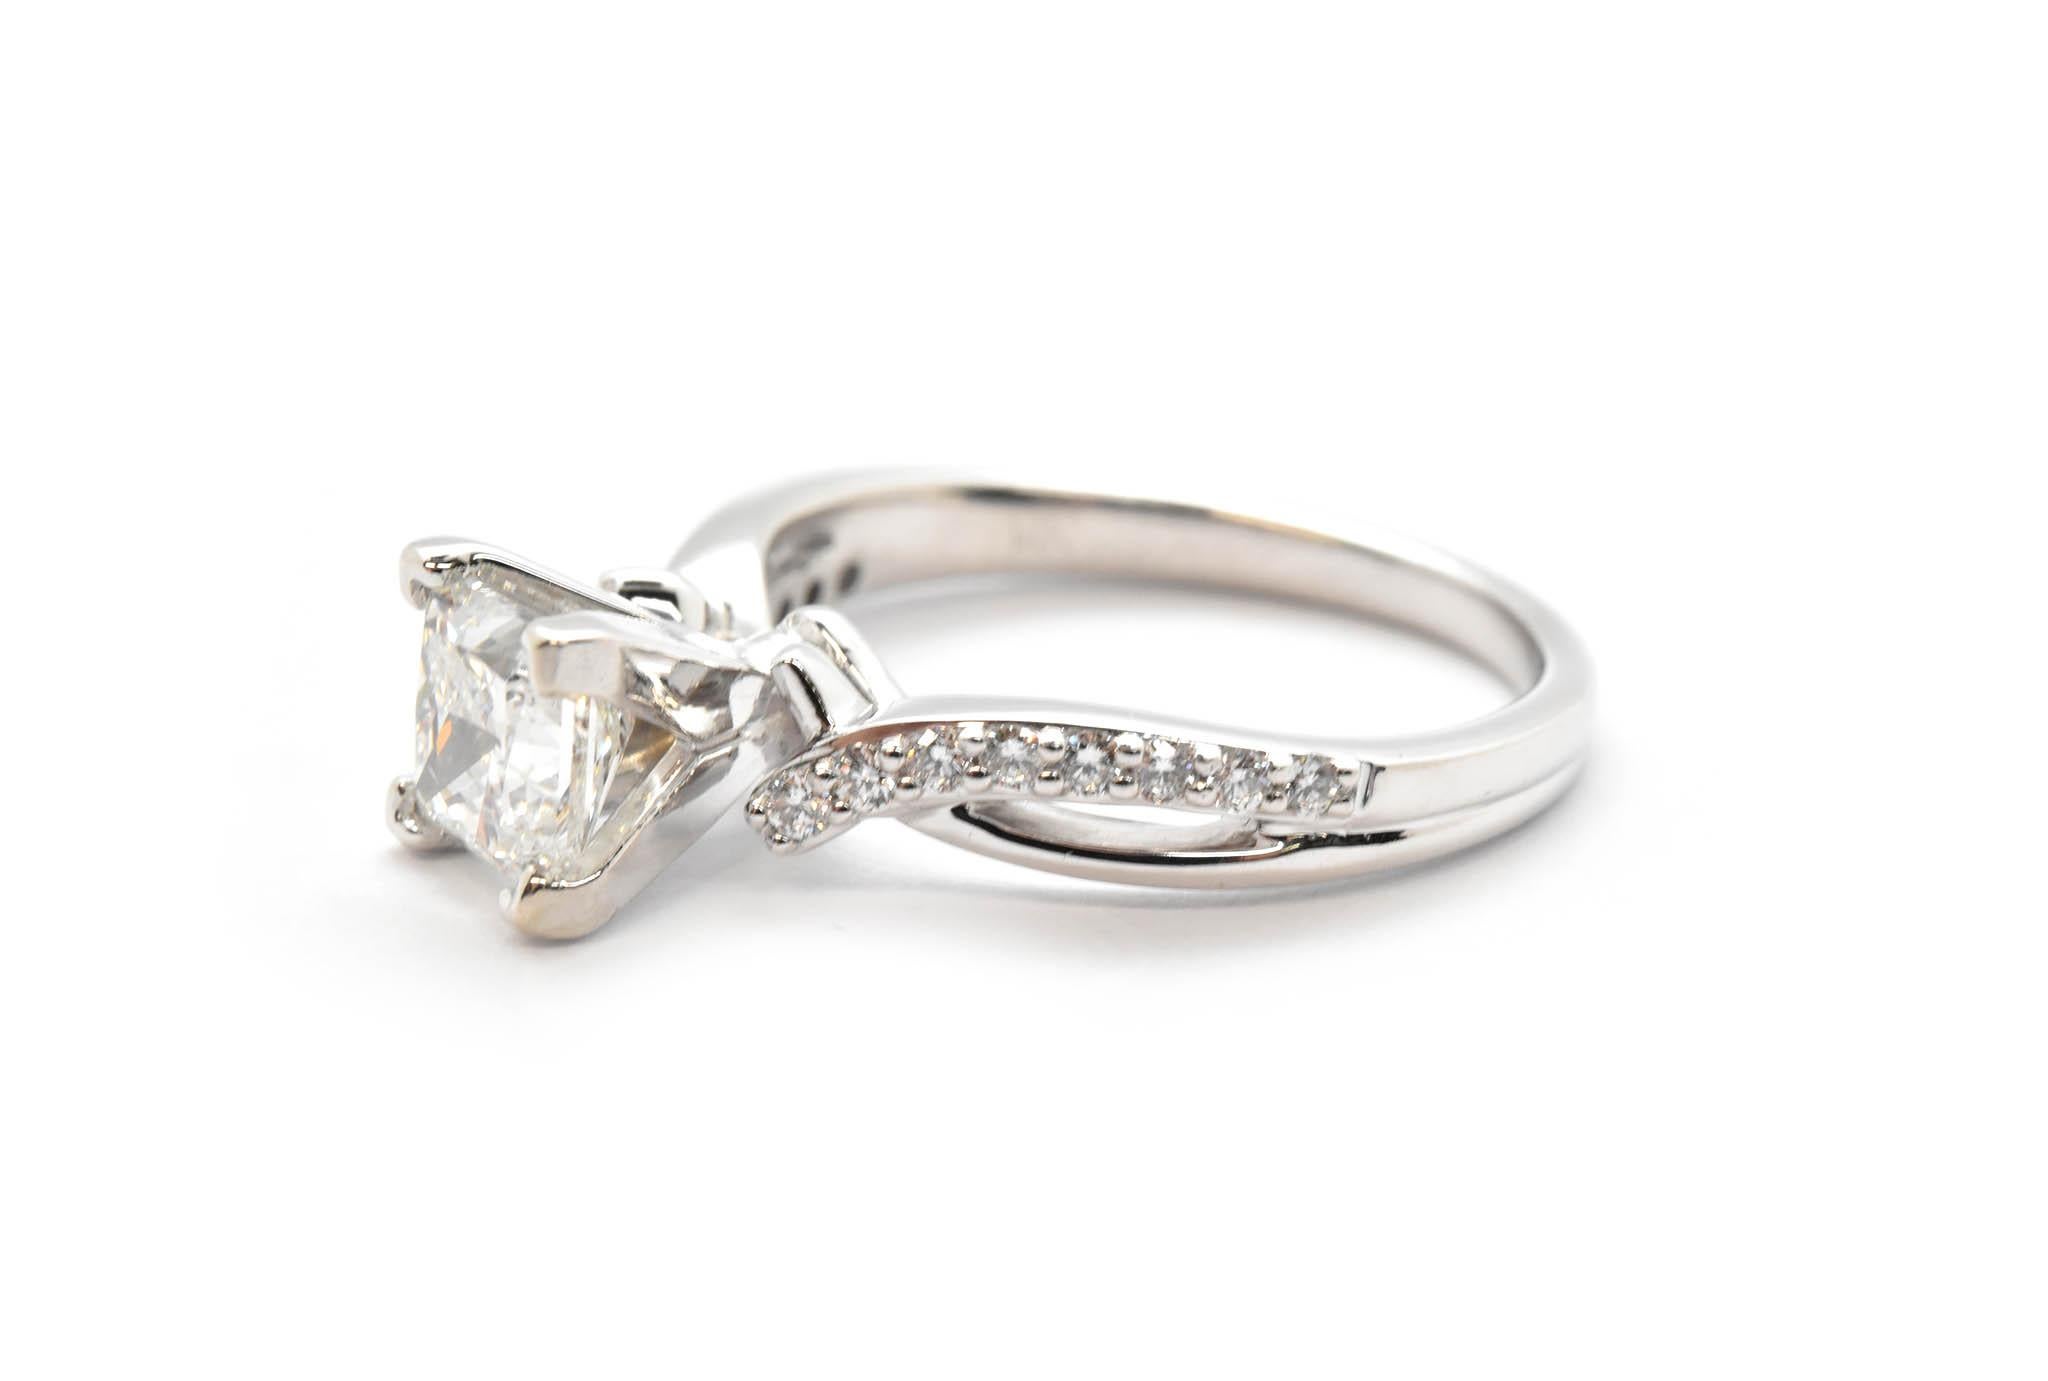 1.25 carat princess cut diamond engagement ring